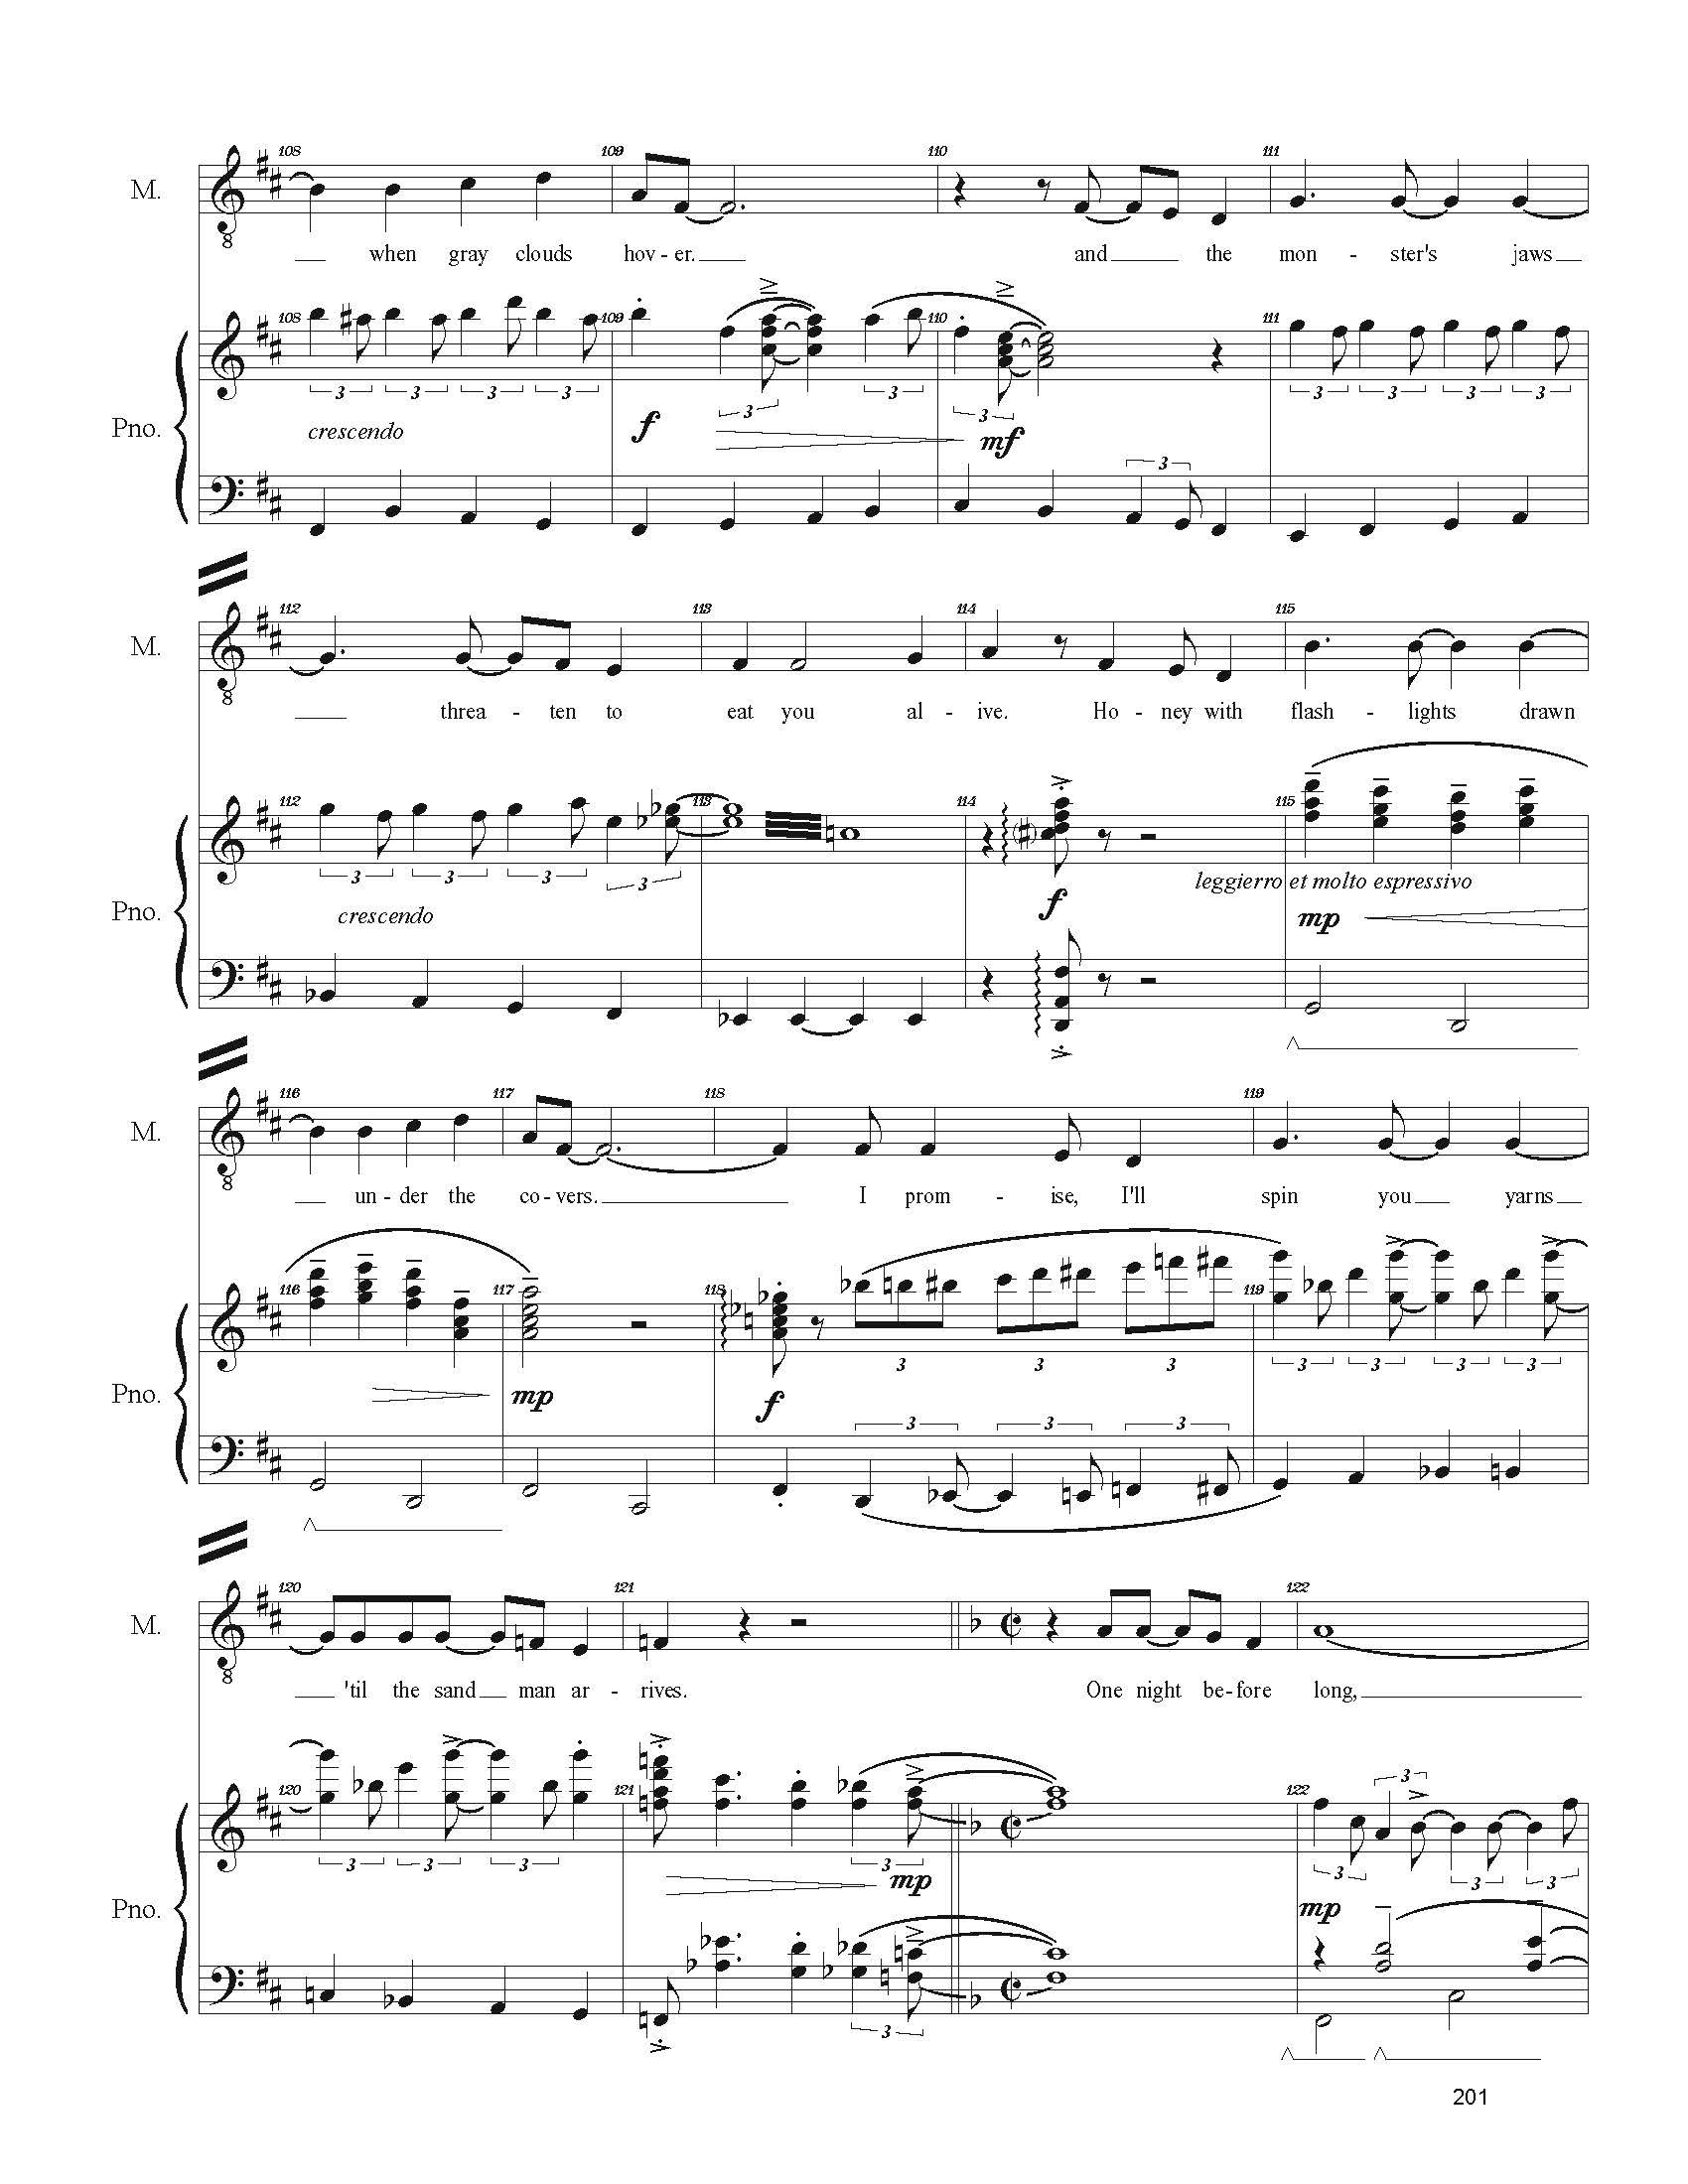 FULL PIANO VOCAL SCORE DRAFT 1 - Score_Page_201.jpg